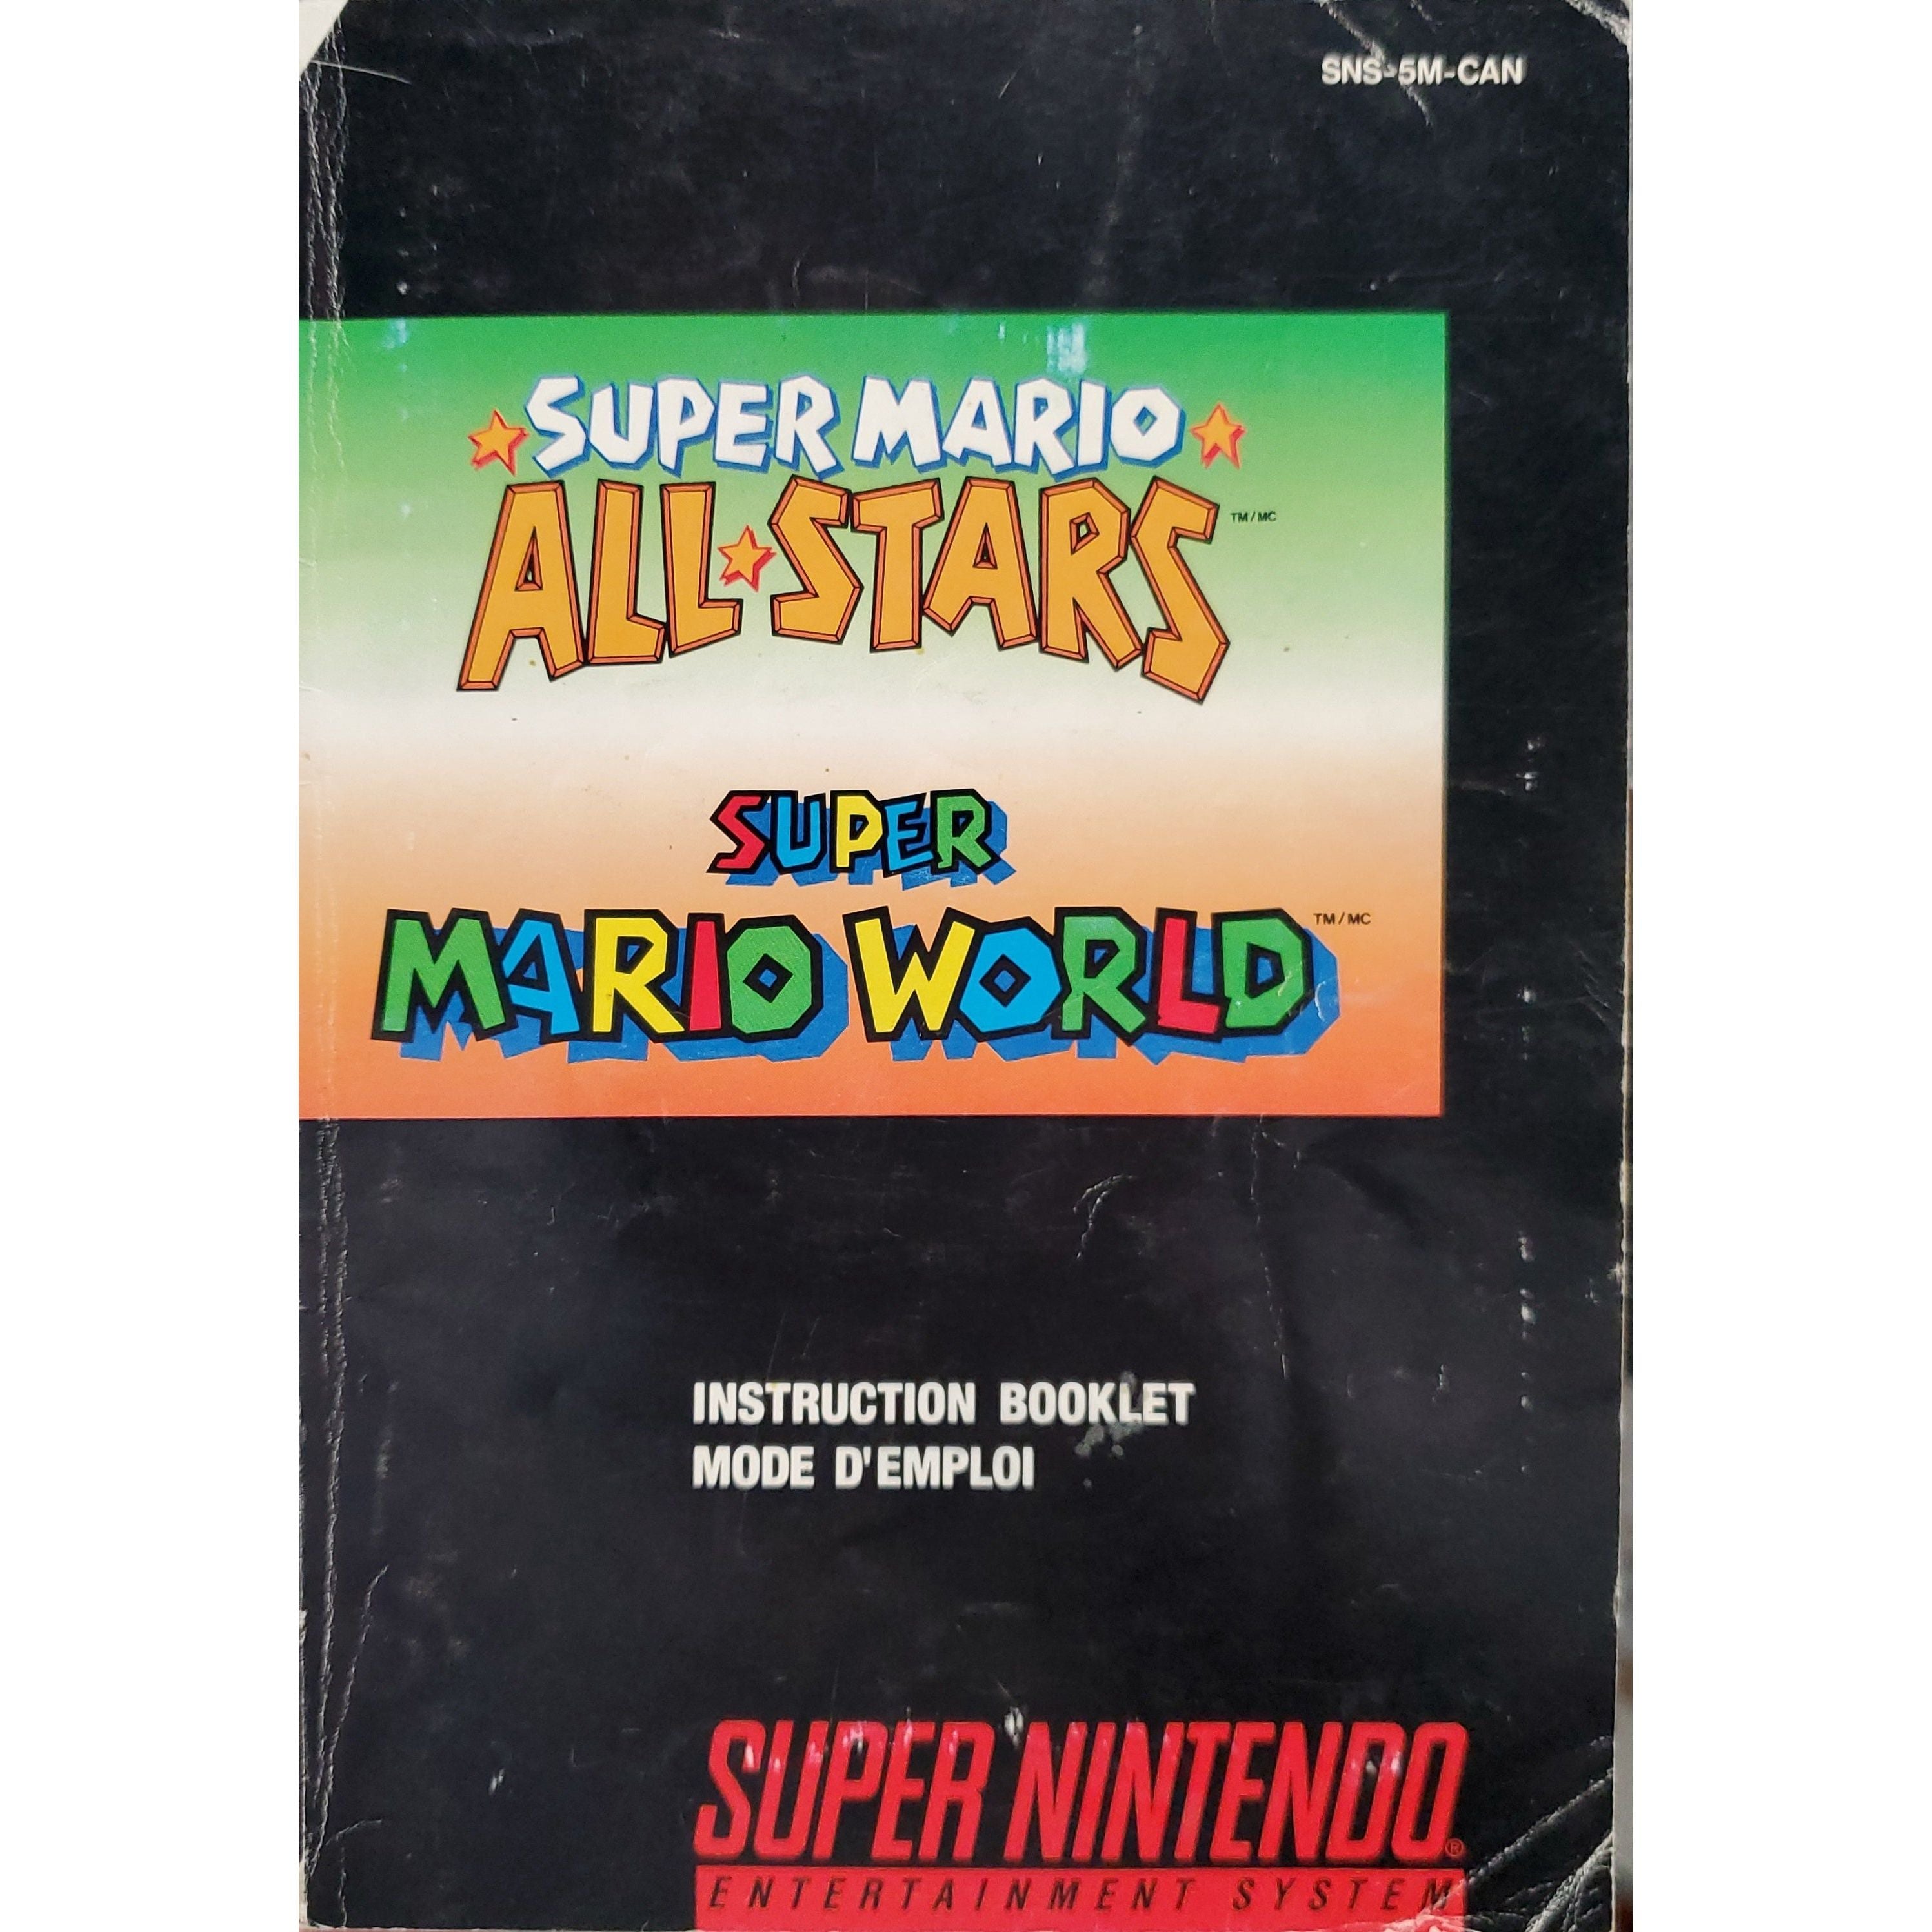 SNES - Super Mario All Stars & Super Mario World (Manual)